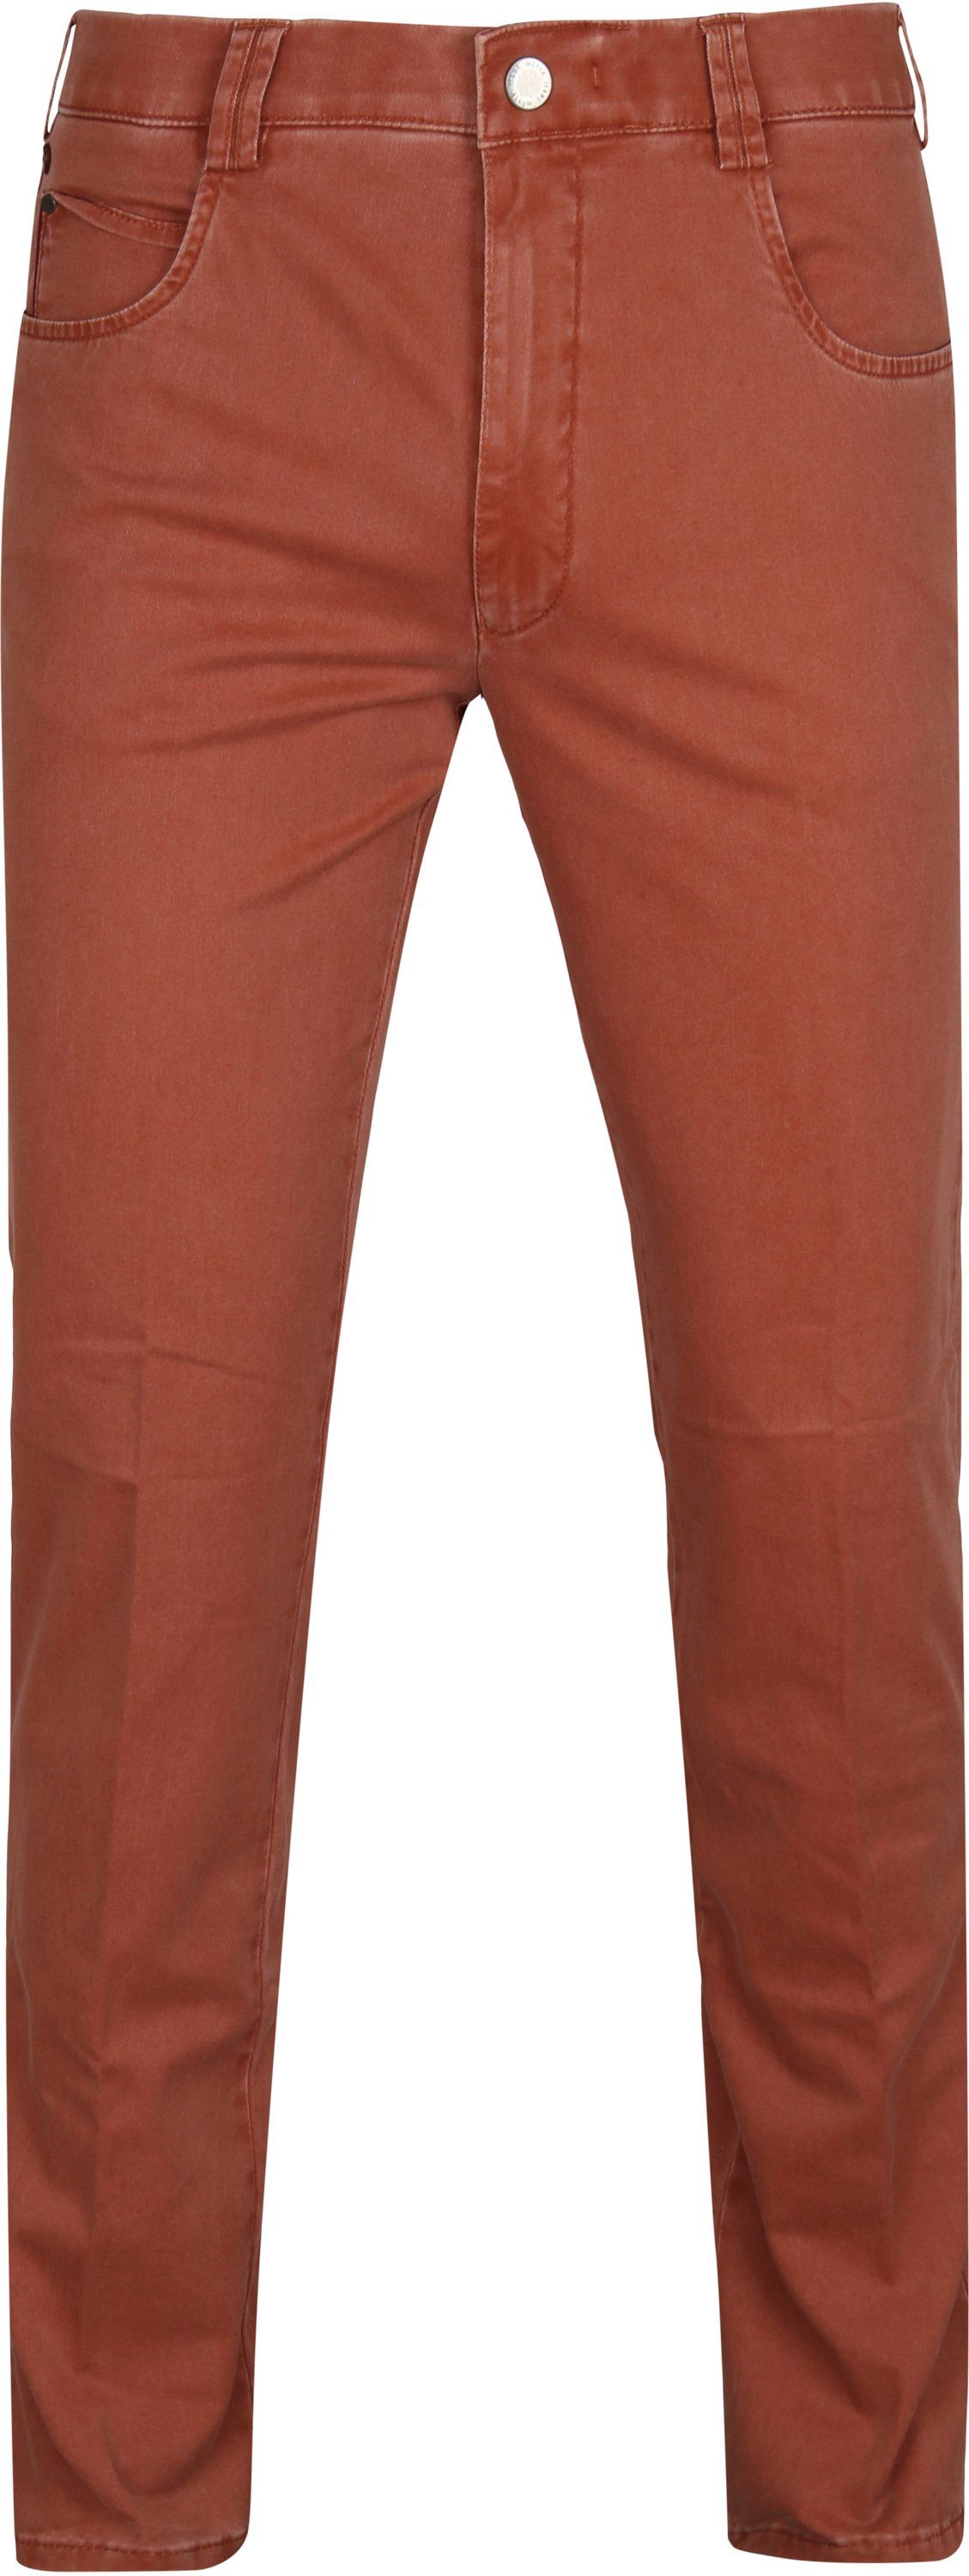 Meyer Pants Diego Camel Red Brown Orange size W 32/33